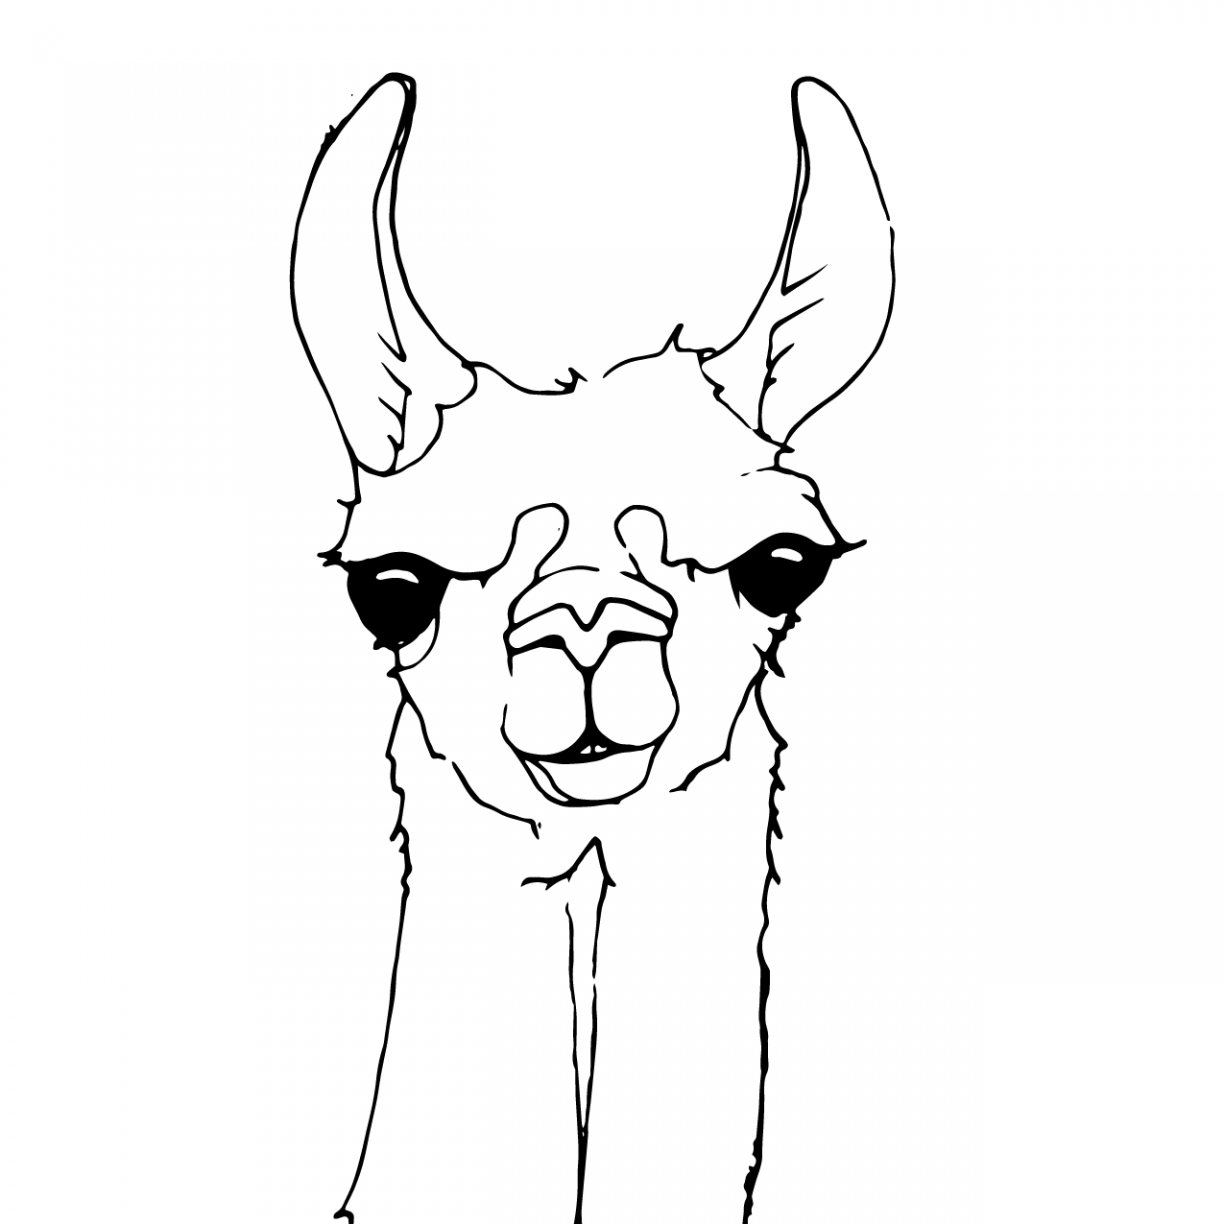 Cute Llama Coloring Pages at GetDrawings Free download